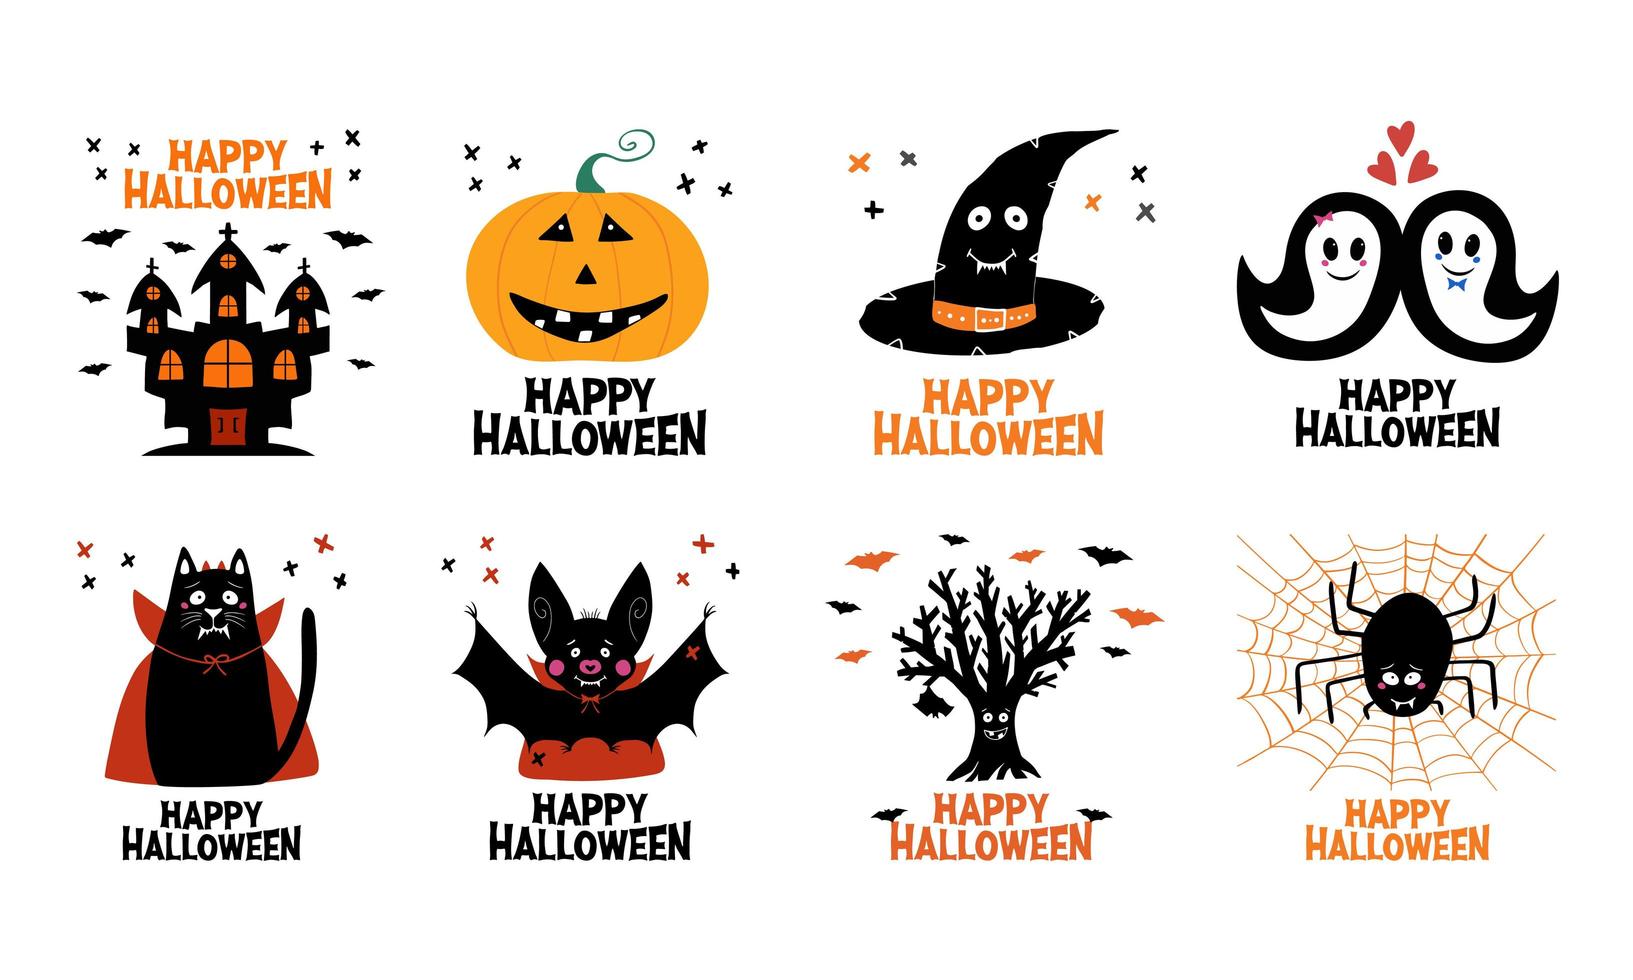 Halloween greeting cards Castle witch hat ghost cat bat spider pumpkin vector